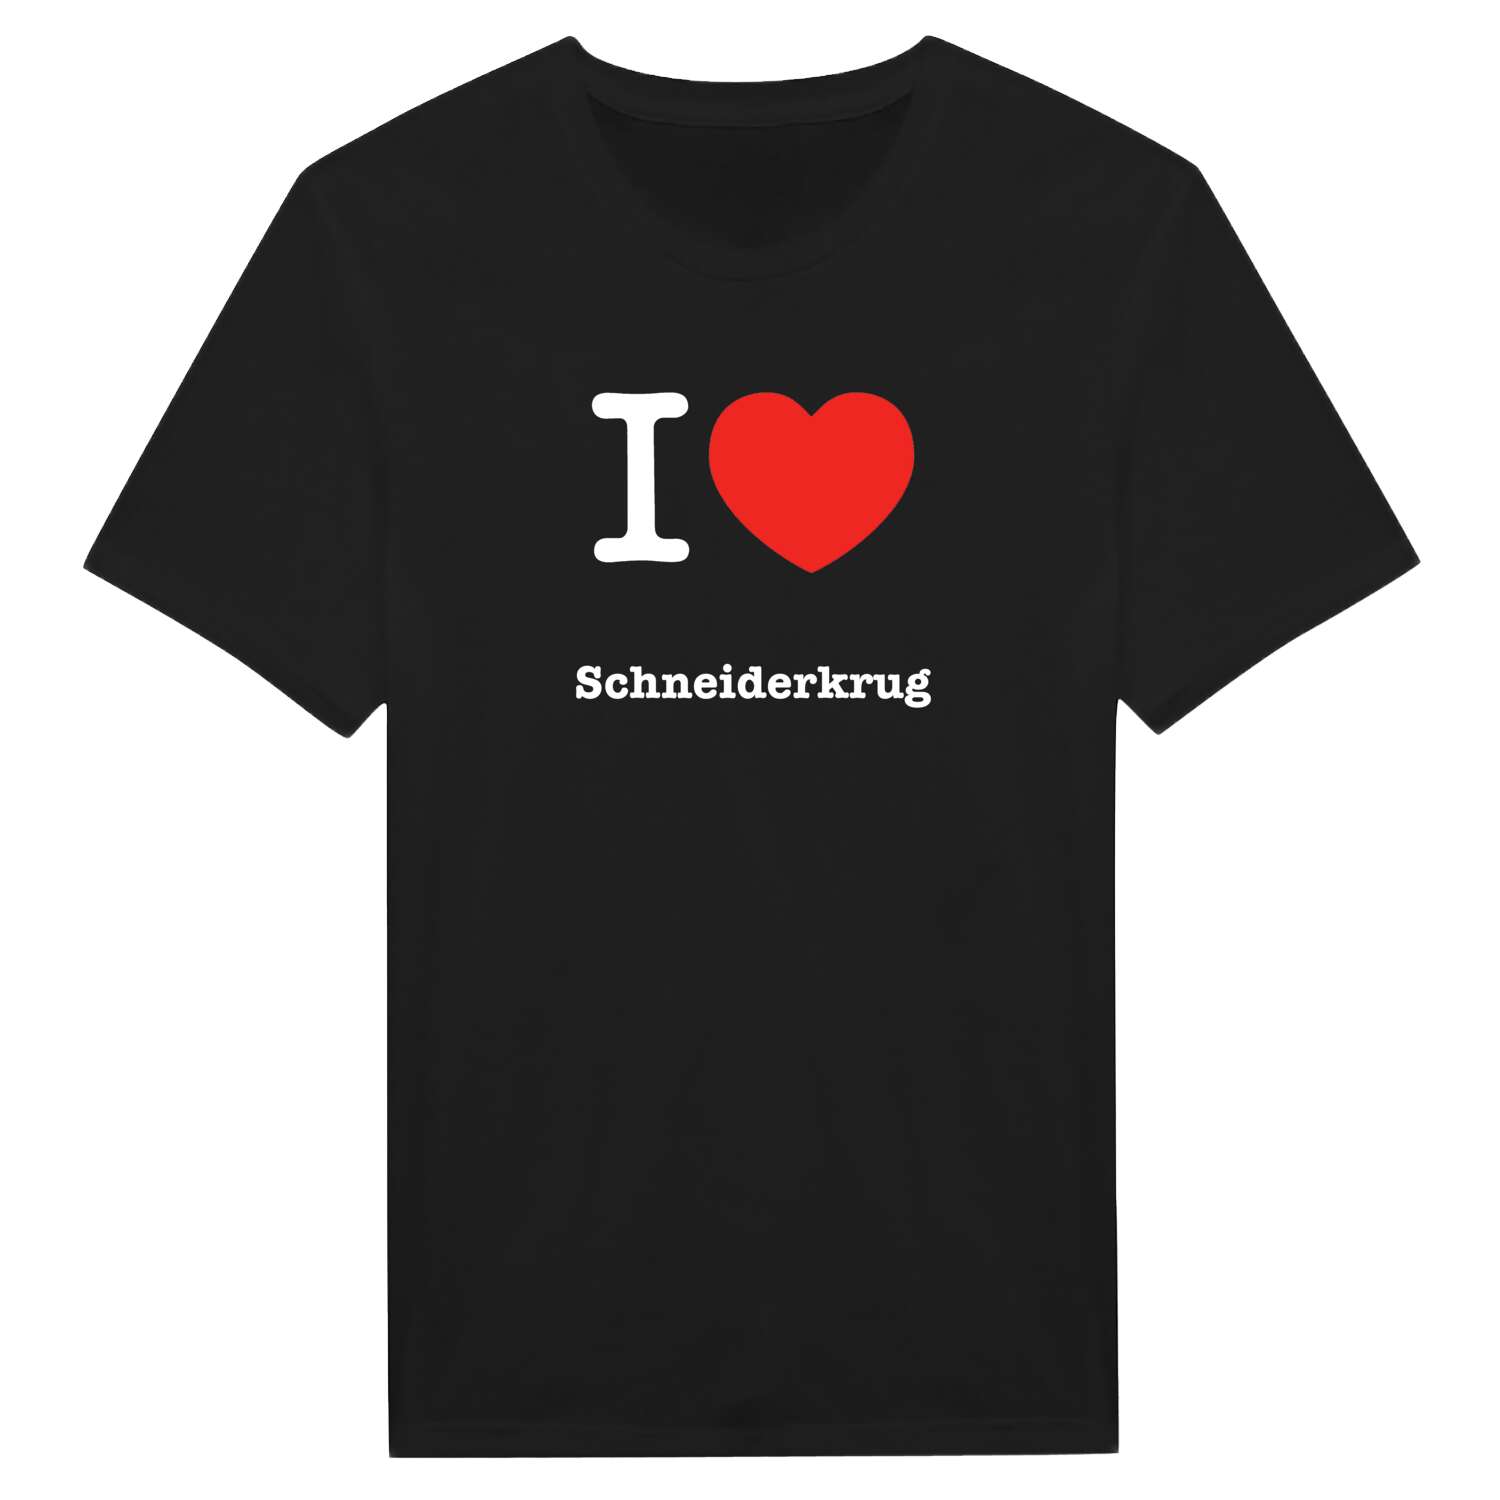 Schneiderkrug T-Shirt »I love«